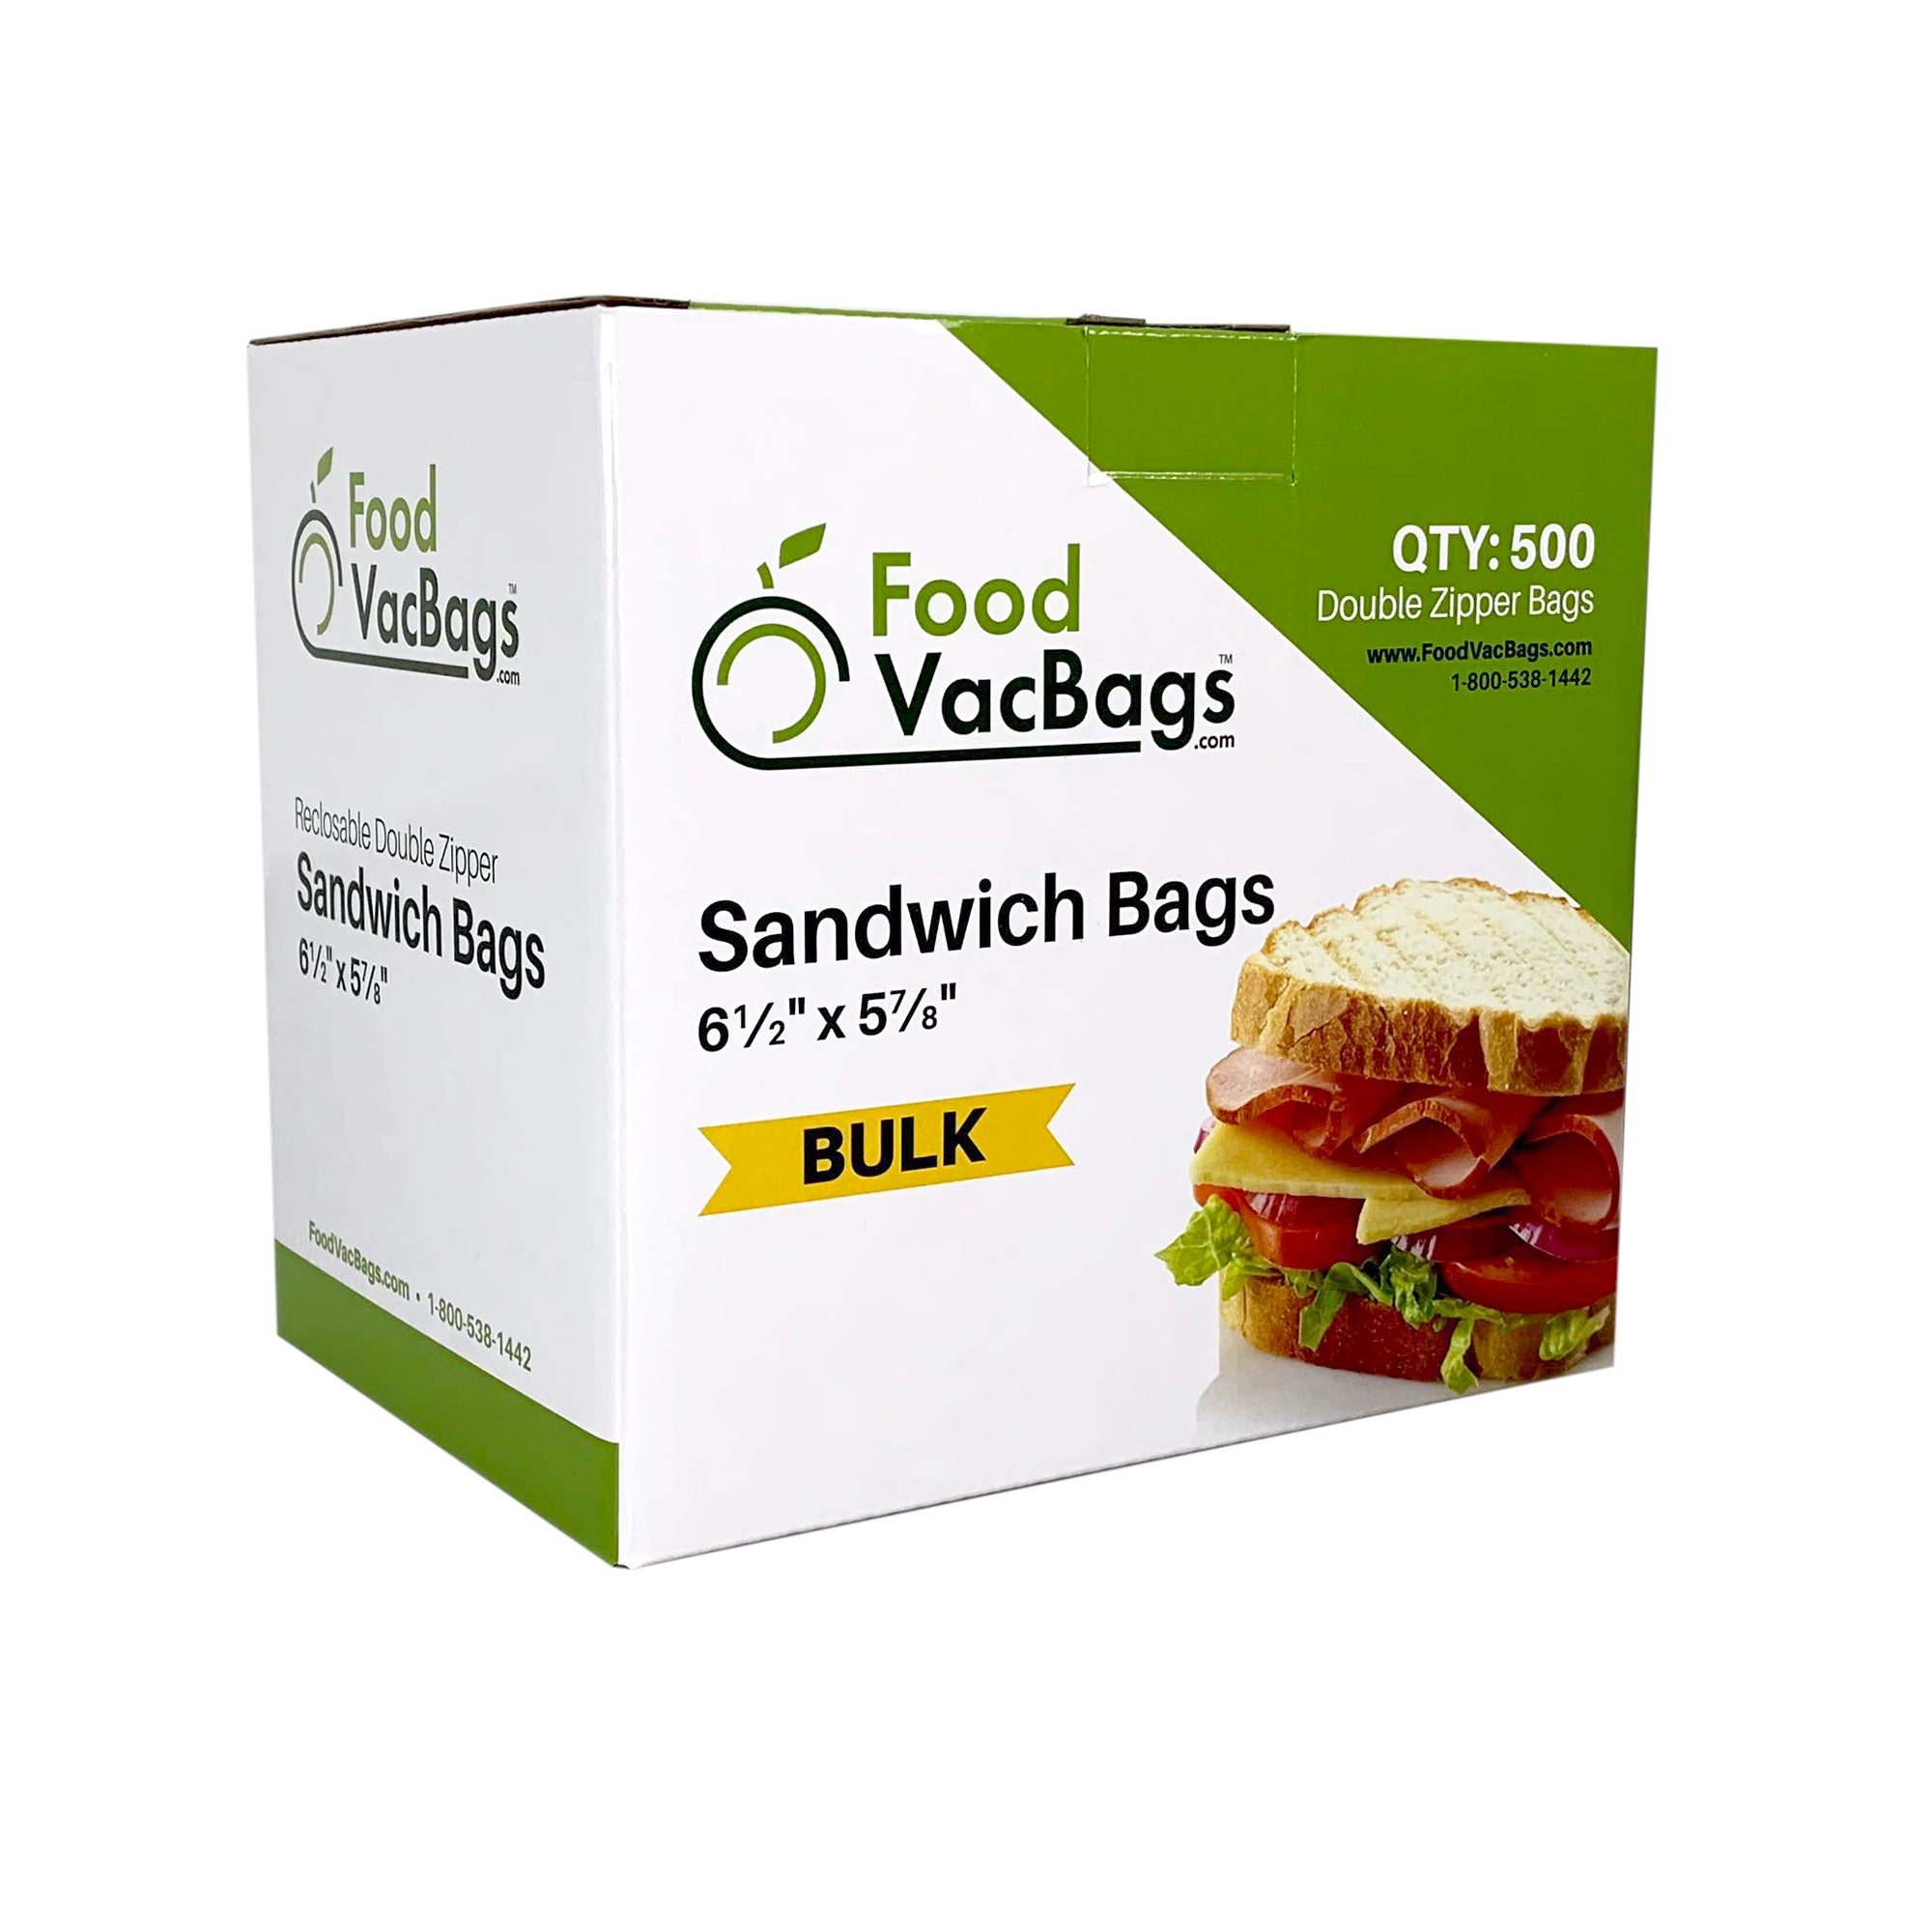 Quart Size Bag vs Sandwich Bag (2023): Which is Better for Storing Liq –  EzPacking